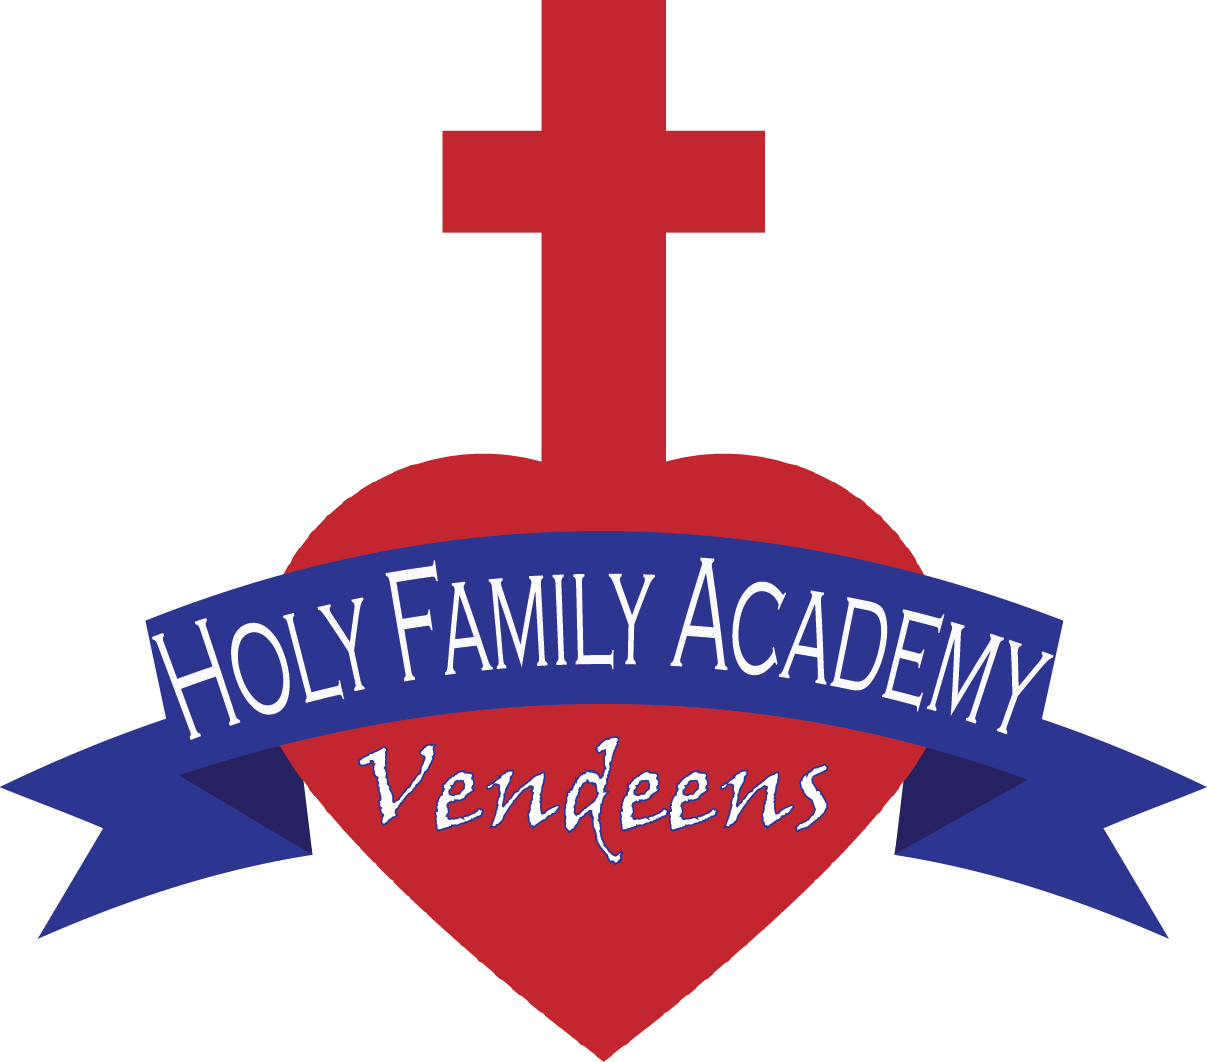 hfa-logo-with-vendeens